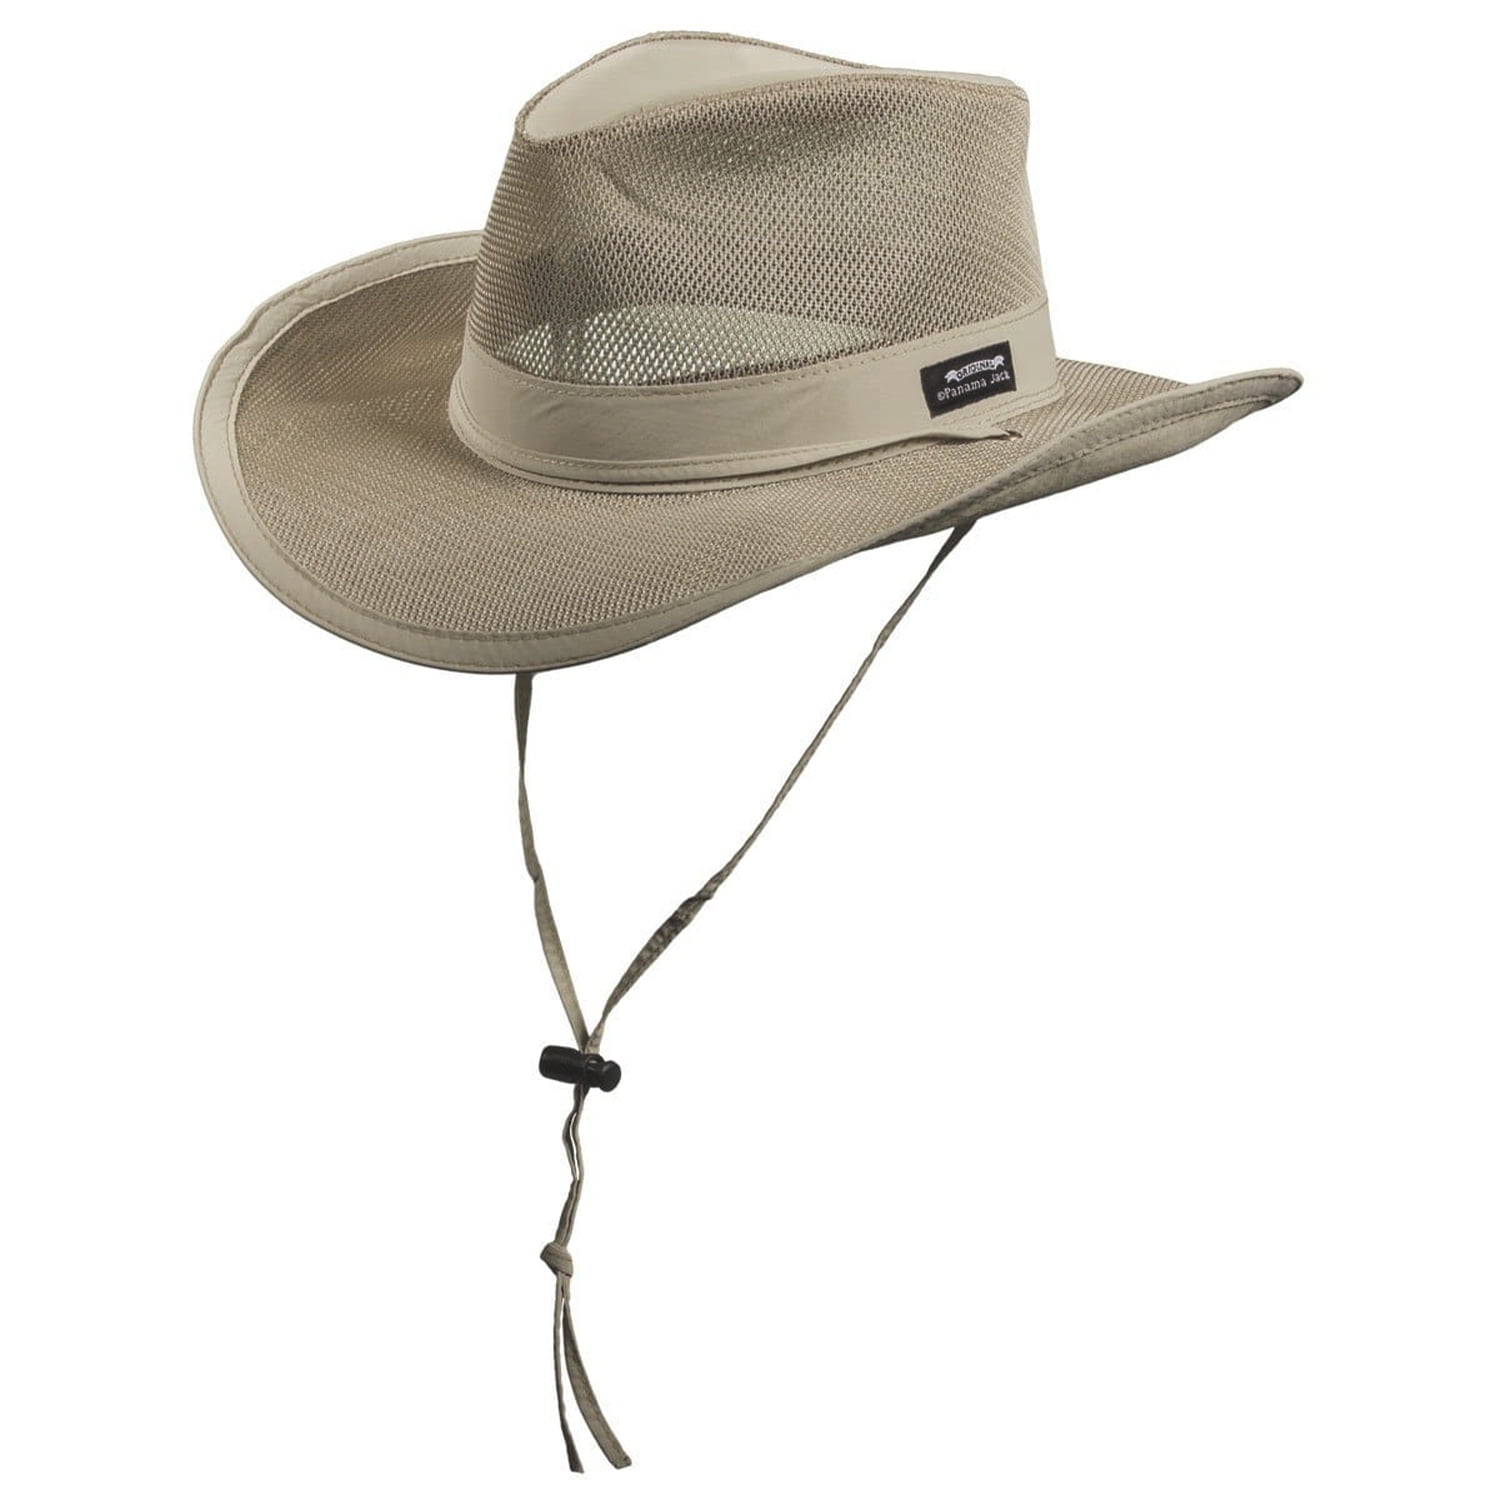 Panama Jack Mesh Crown Safari Sun Hat, 3 Brim, Adjustable Chin Cord, UPF  (SPF) 50+ Sun Protection (Khaki, X-Large)